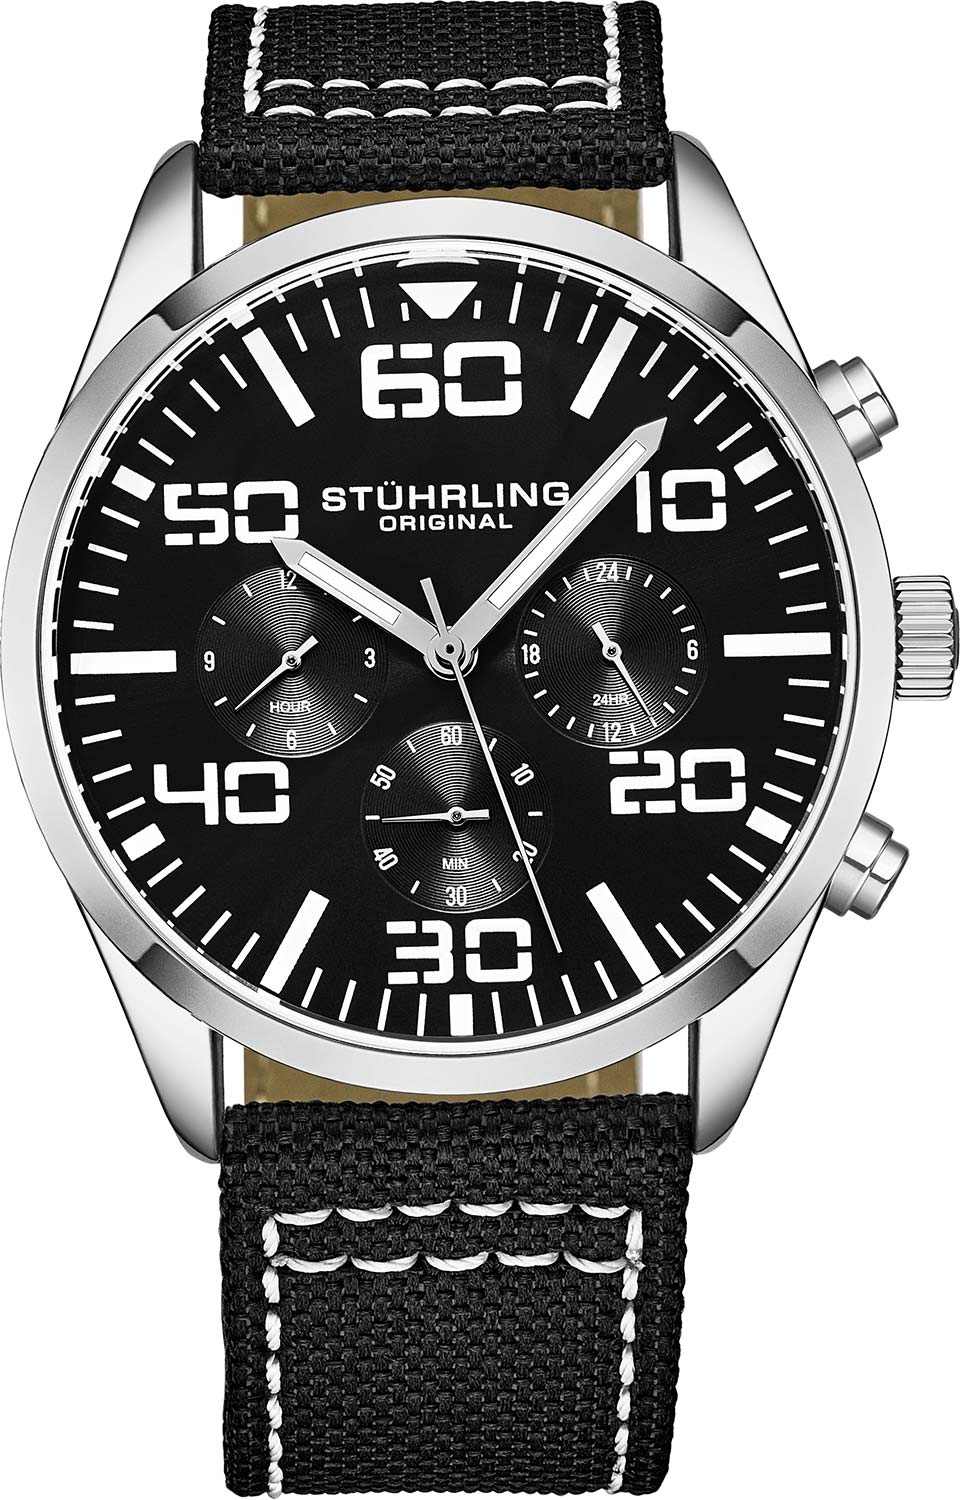 Наручные часы Stuhrling 4001.2 с хронографом